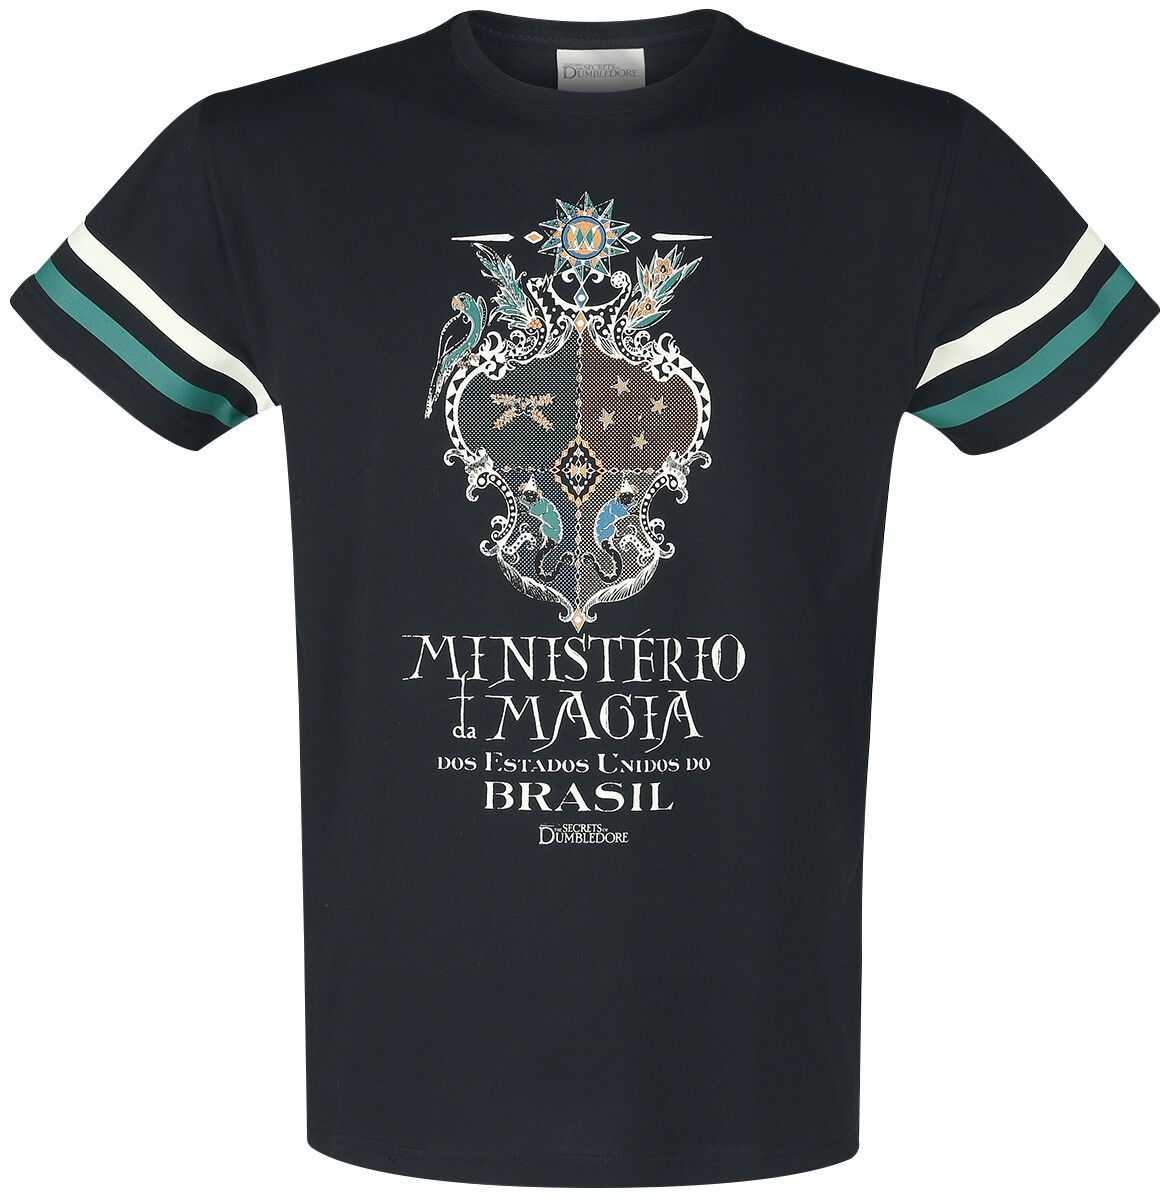 Phantastische Tierwesen Phantastische Tierwesen 3 - Ministerio Da Magia T-Shirt schwarz in L